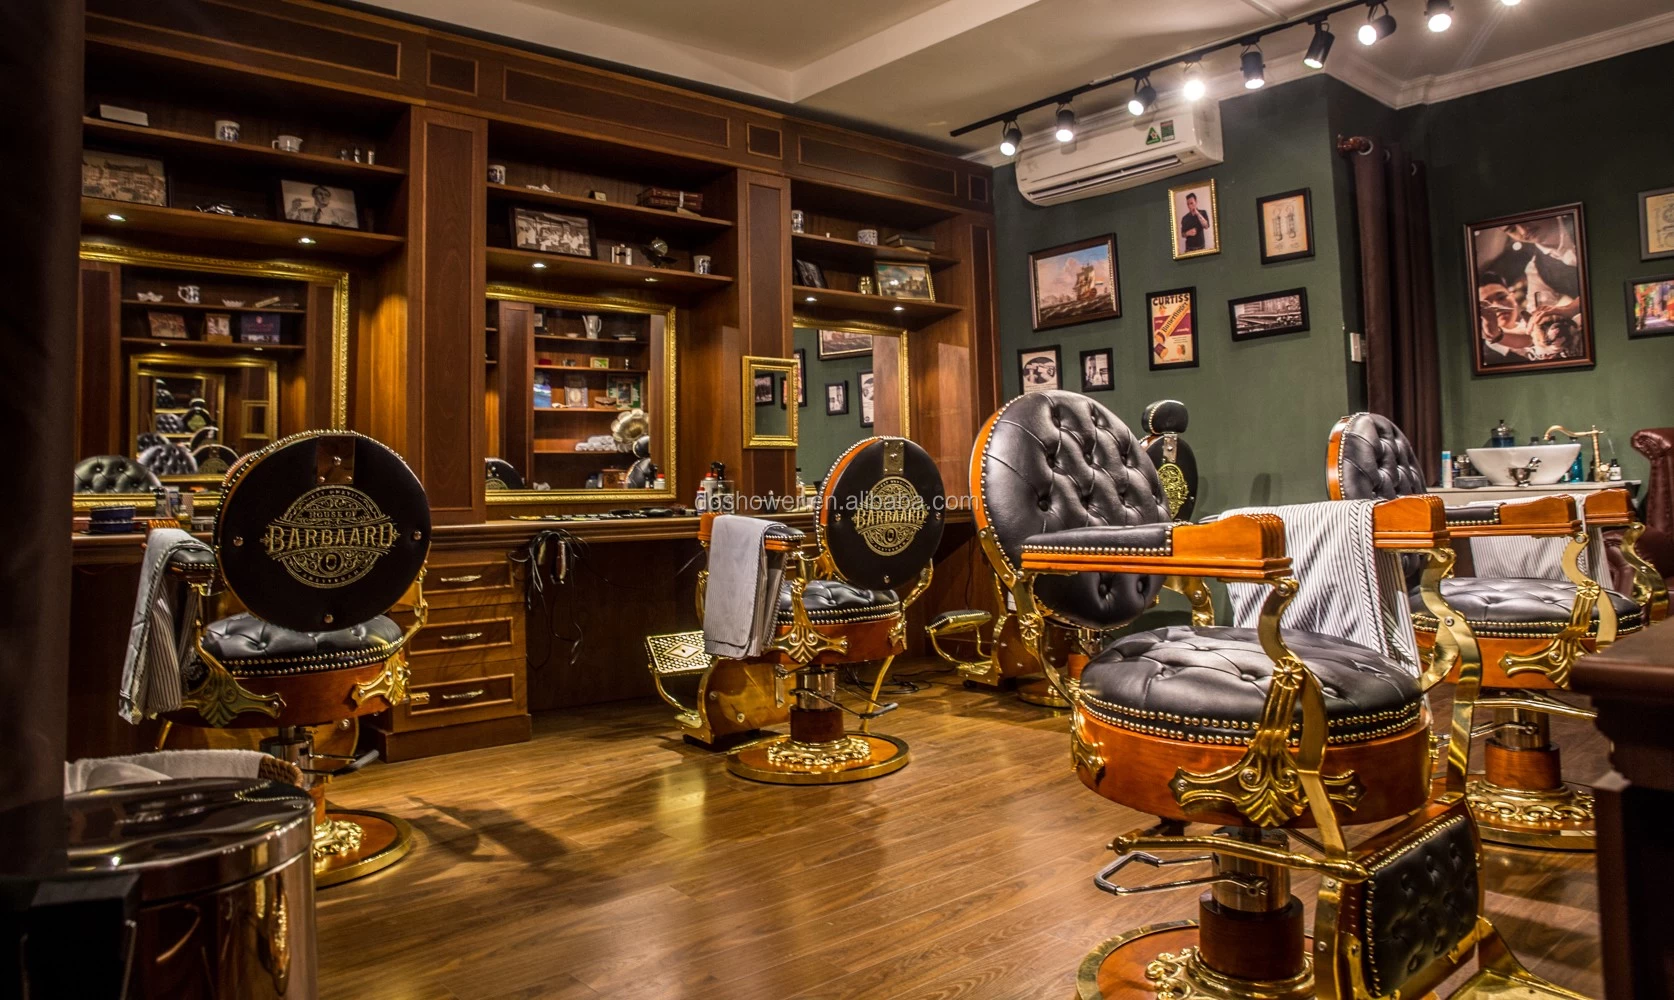 Doshower DS-251 vintage barber chair luxury gold design